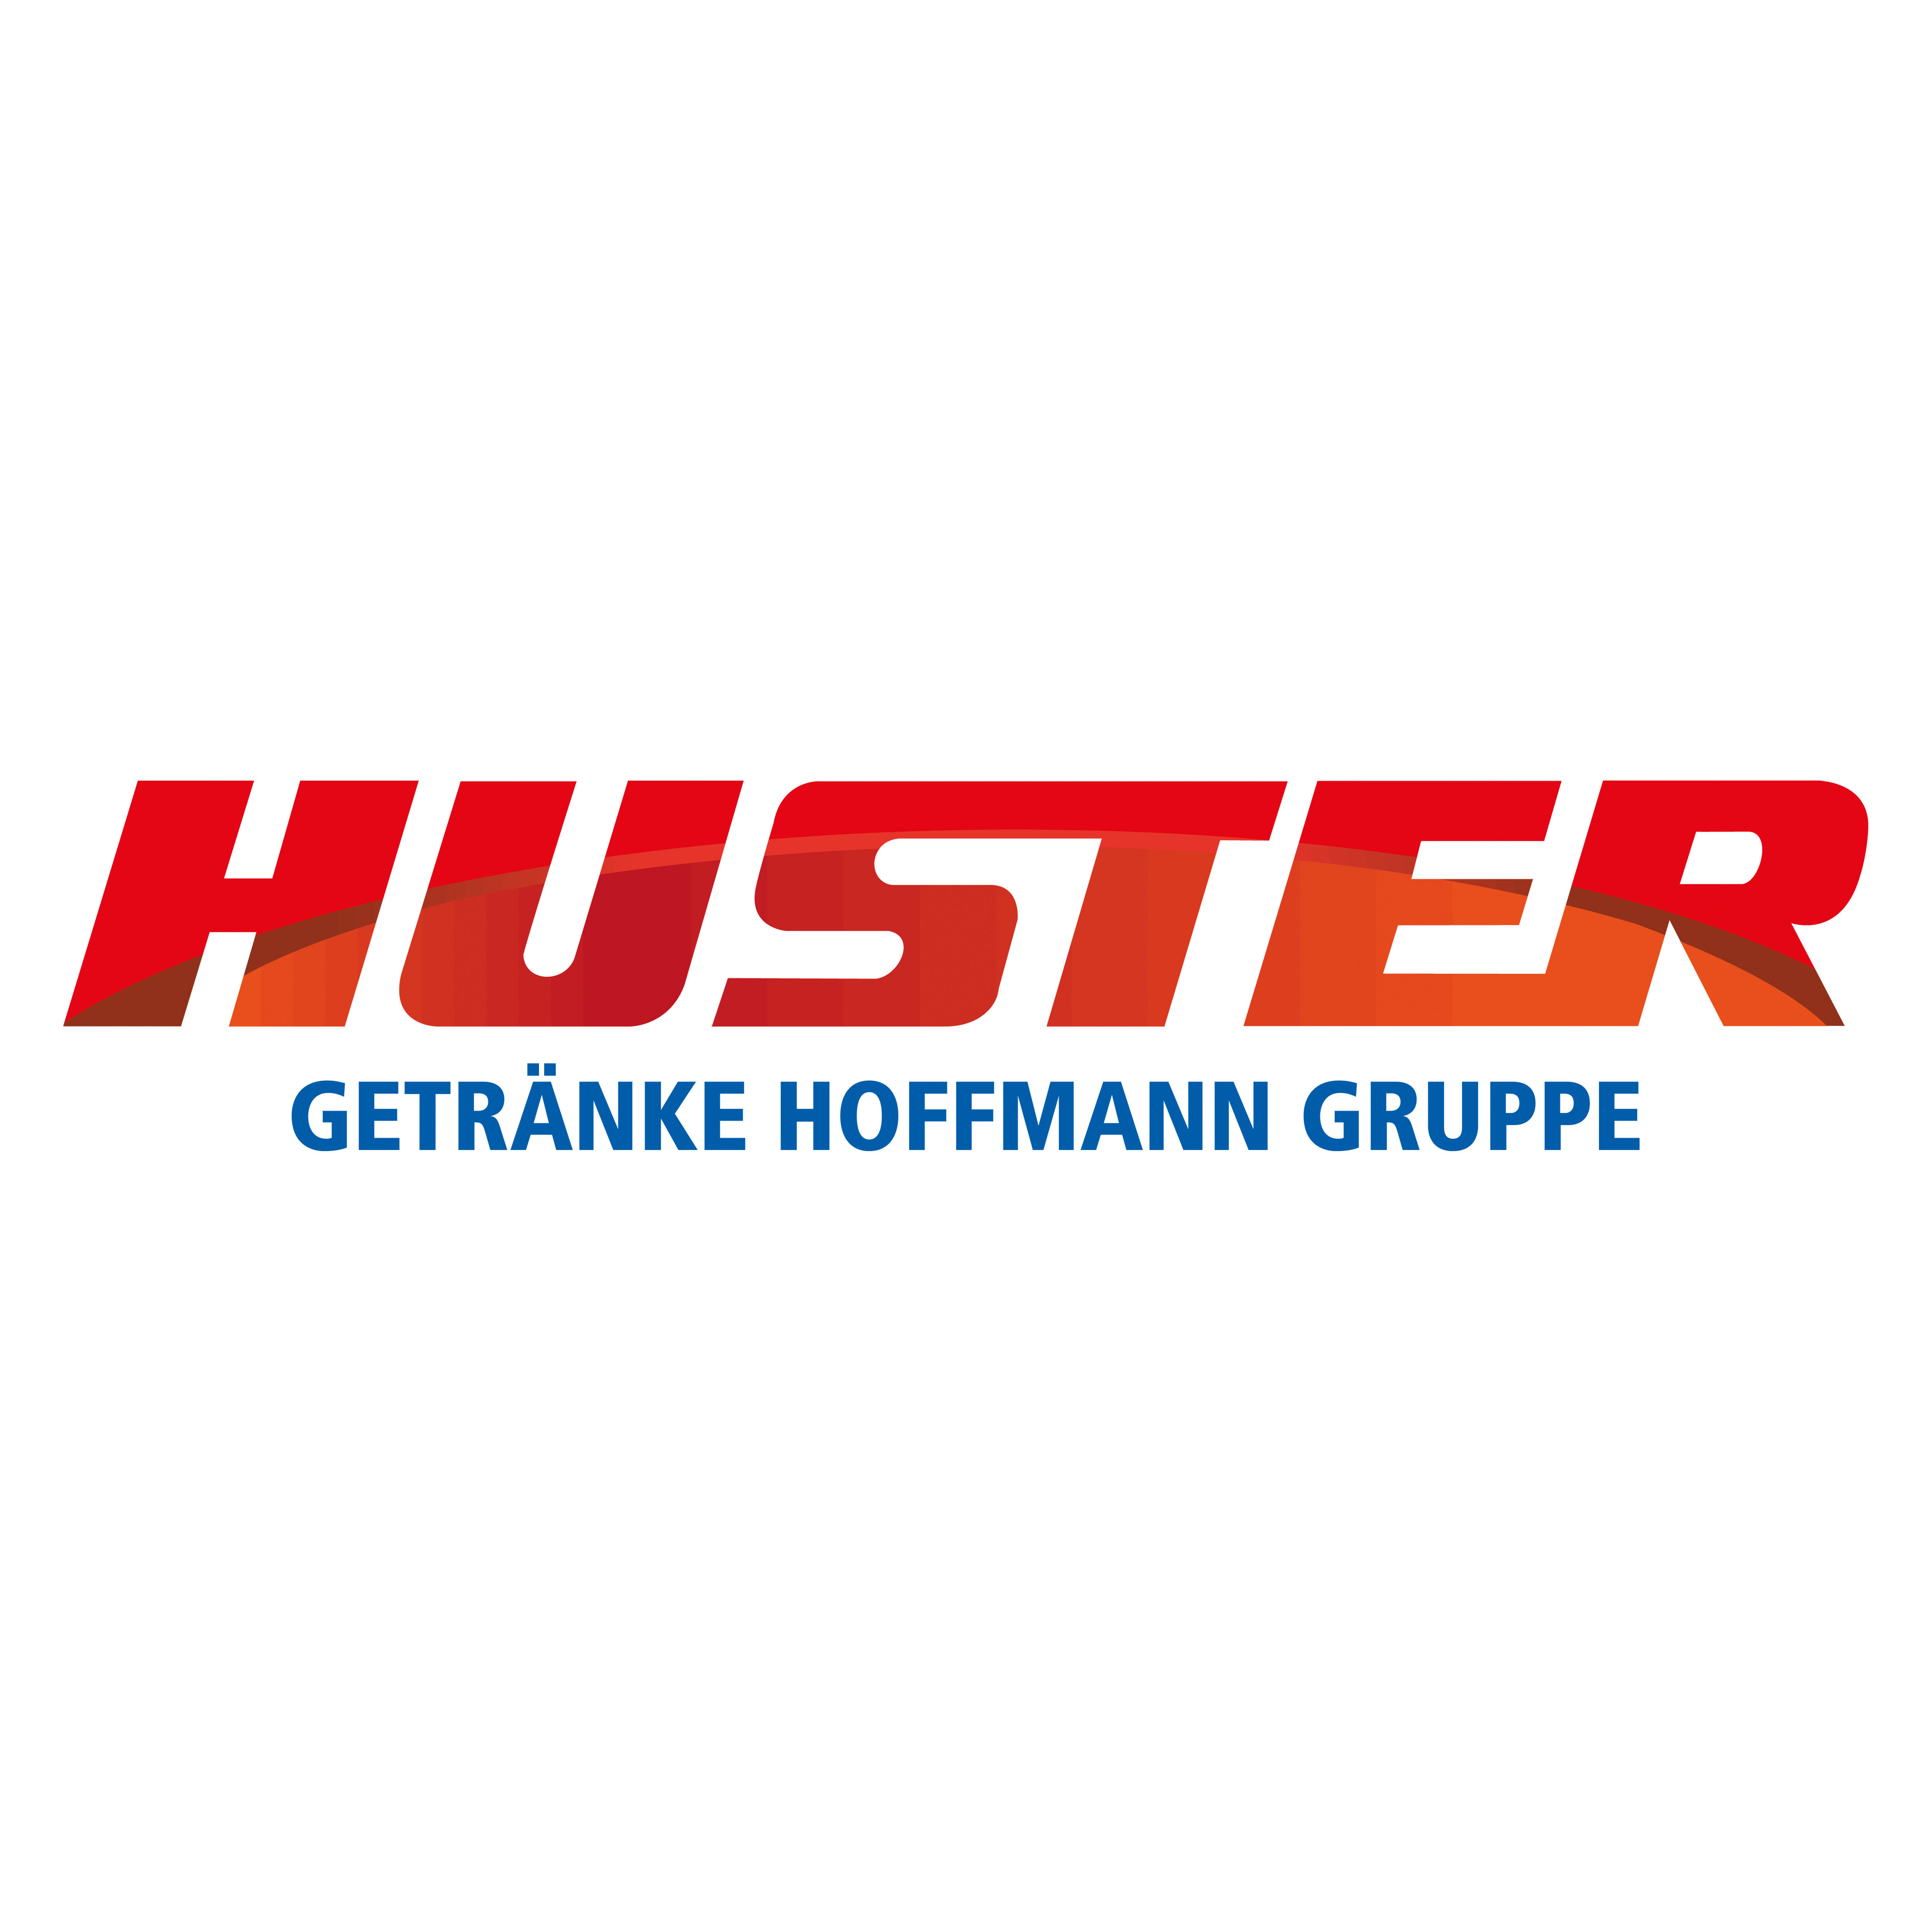 Huster Getränke Hoffmann Gruppe in Grimma - Logo